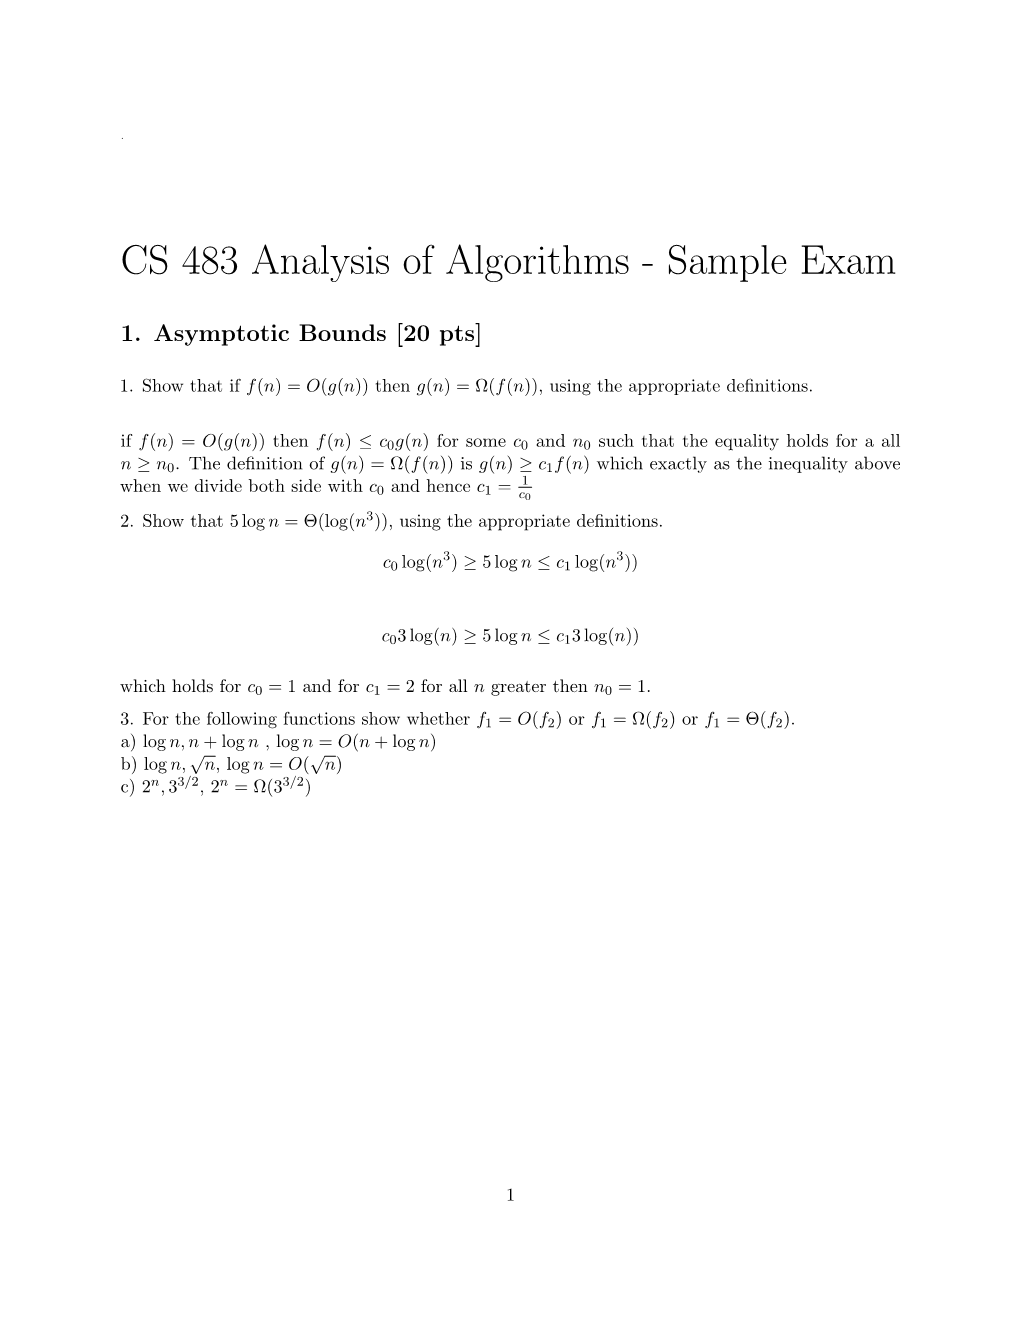 CS 483 Analysis of Algorithms - Sample Exam